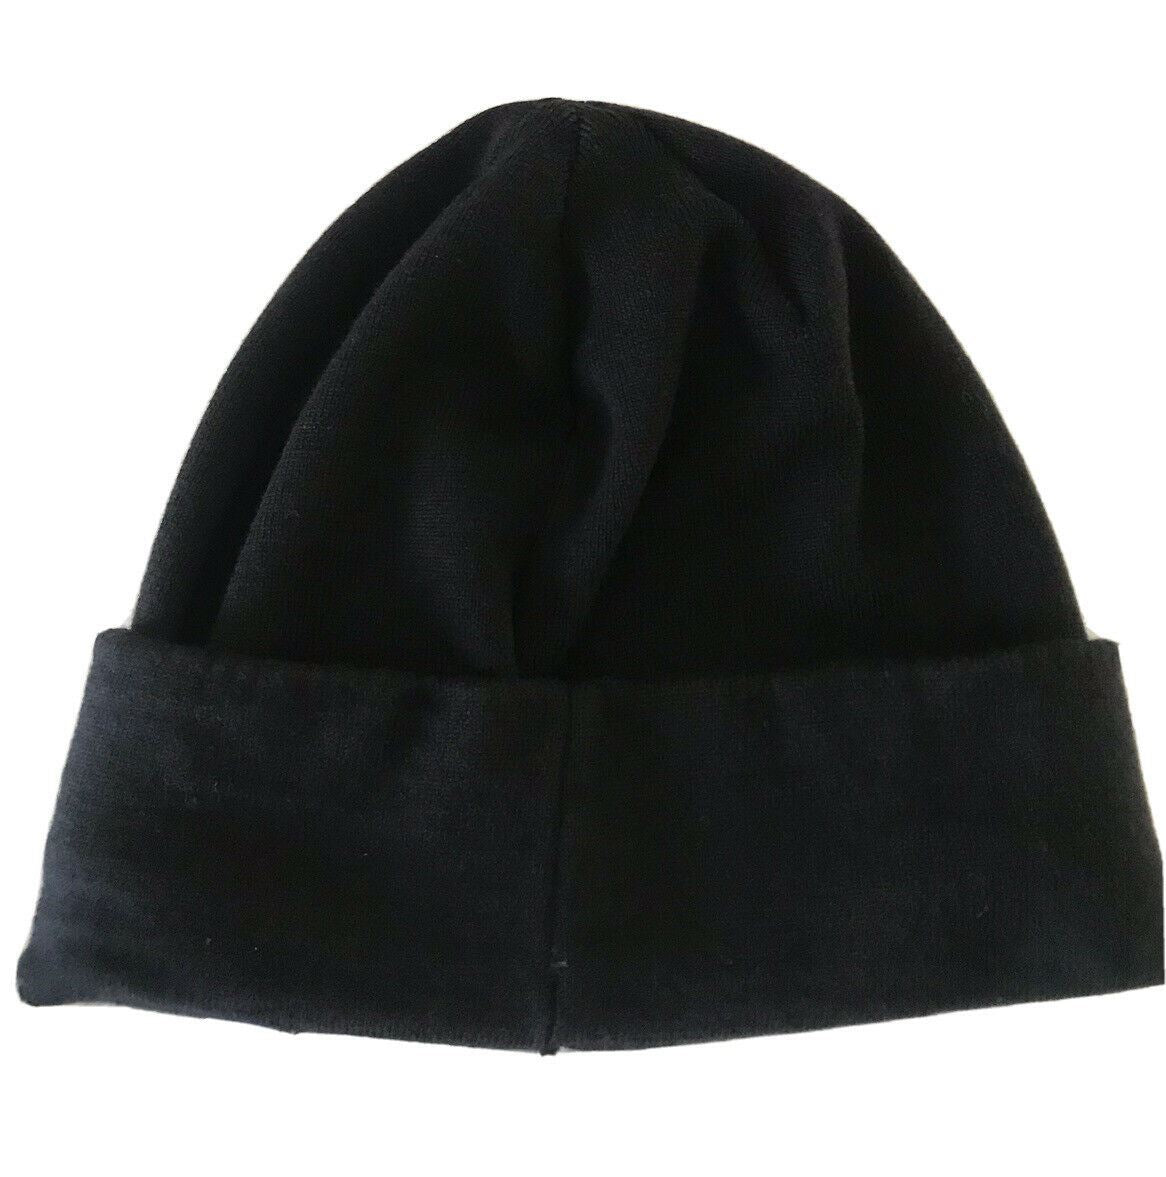 NWT $520 Balmain Logo Beanie Hat Black/White One Size